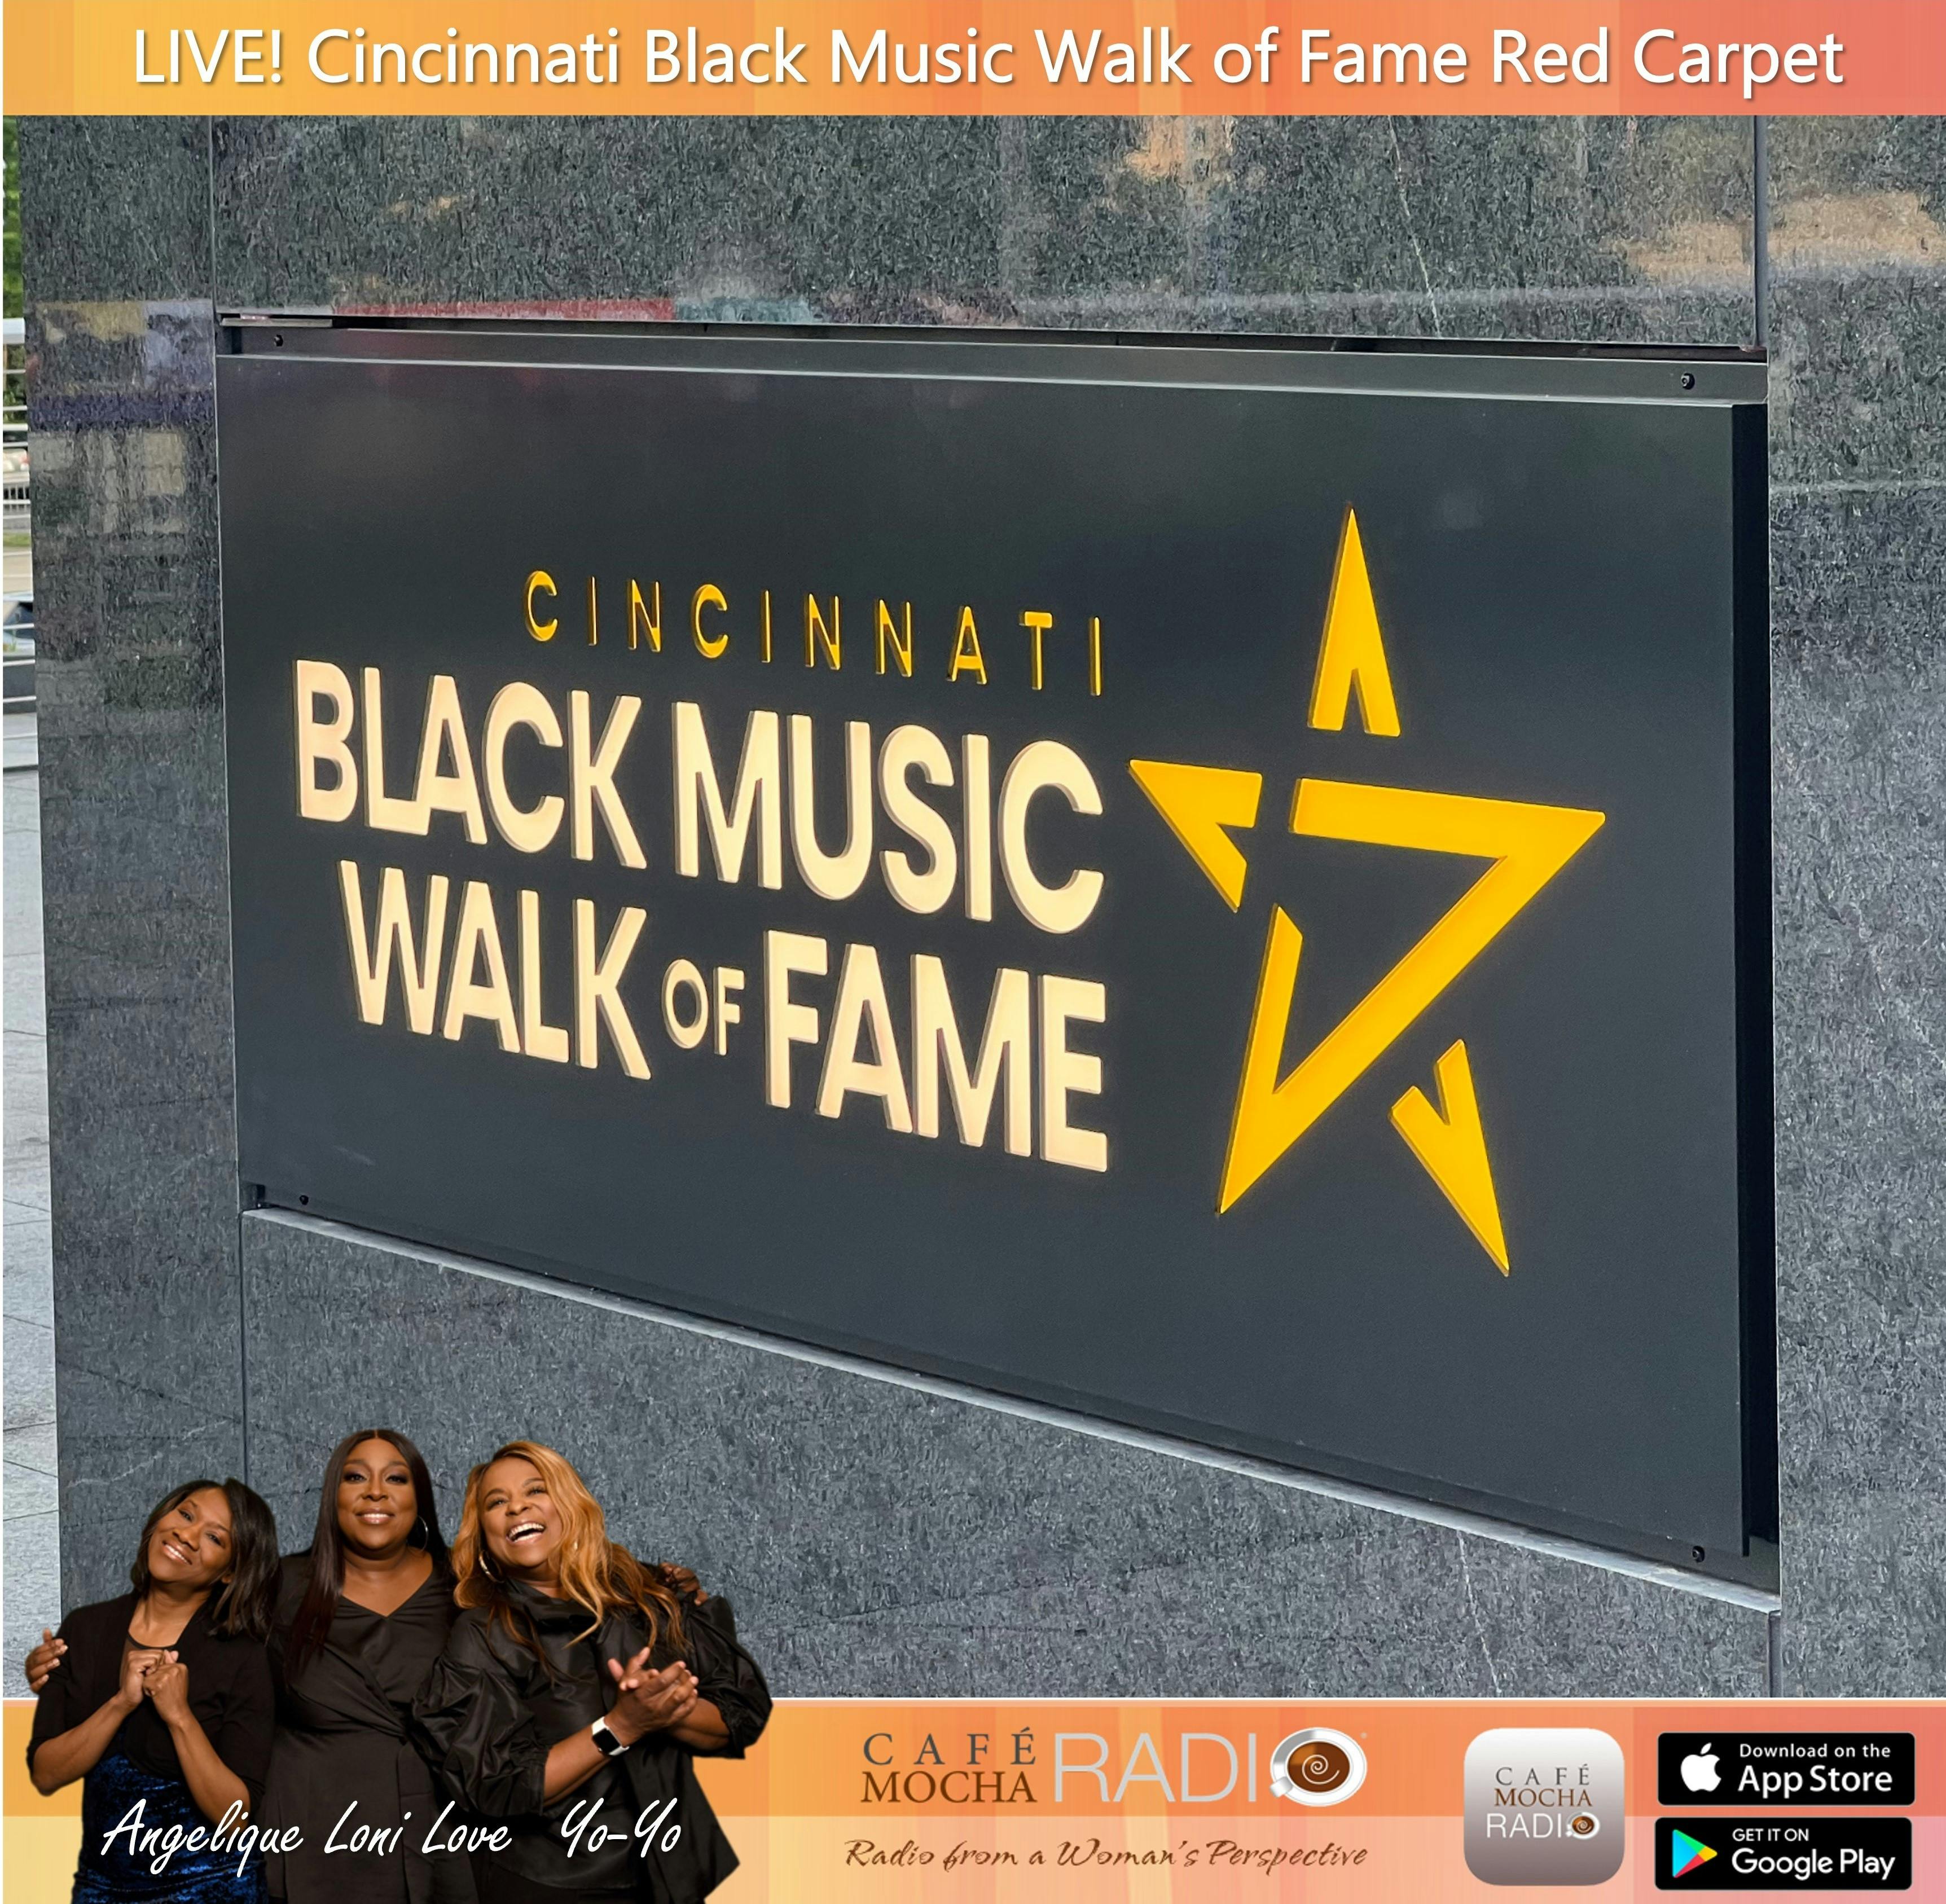 LIVE! Cincinnati Black Music Walk of Fame Red Carpet